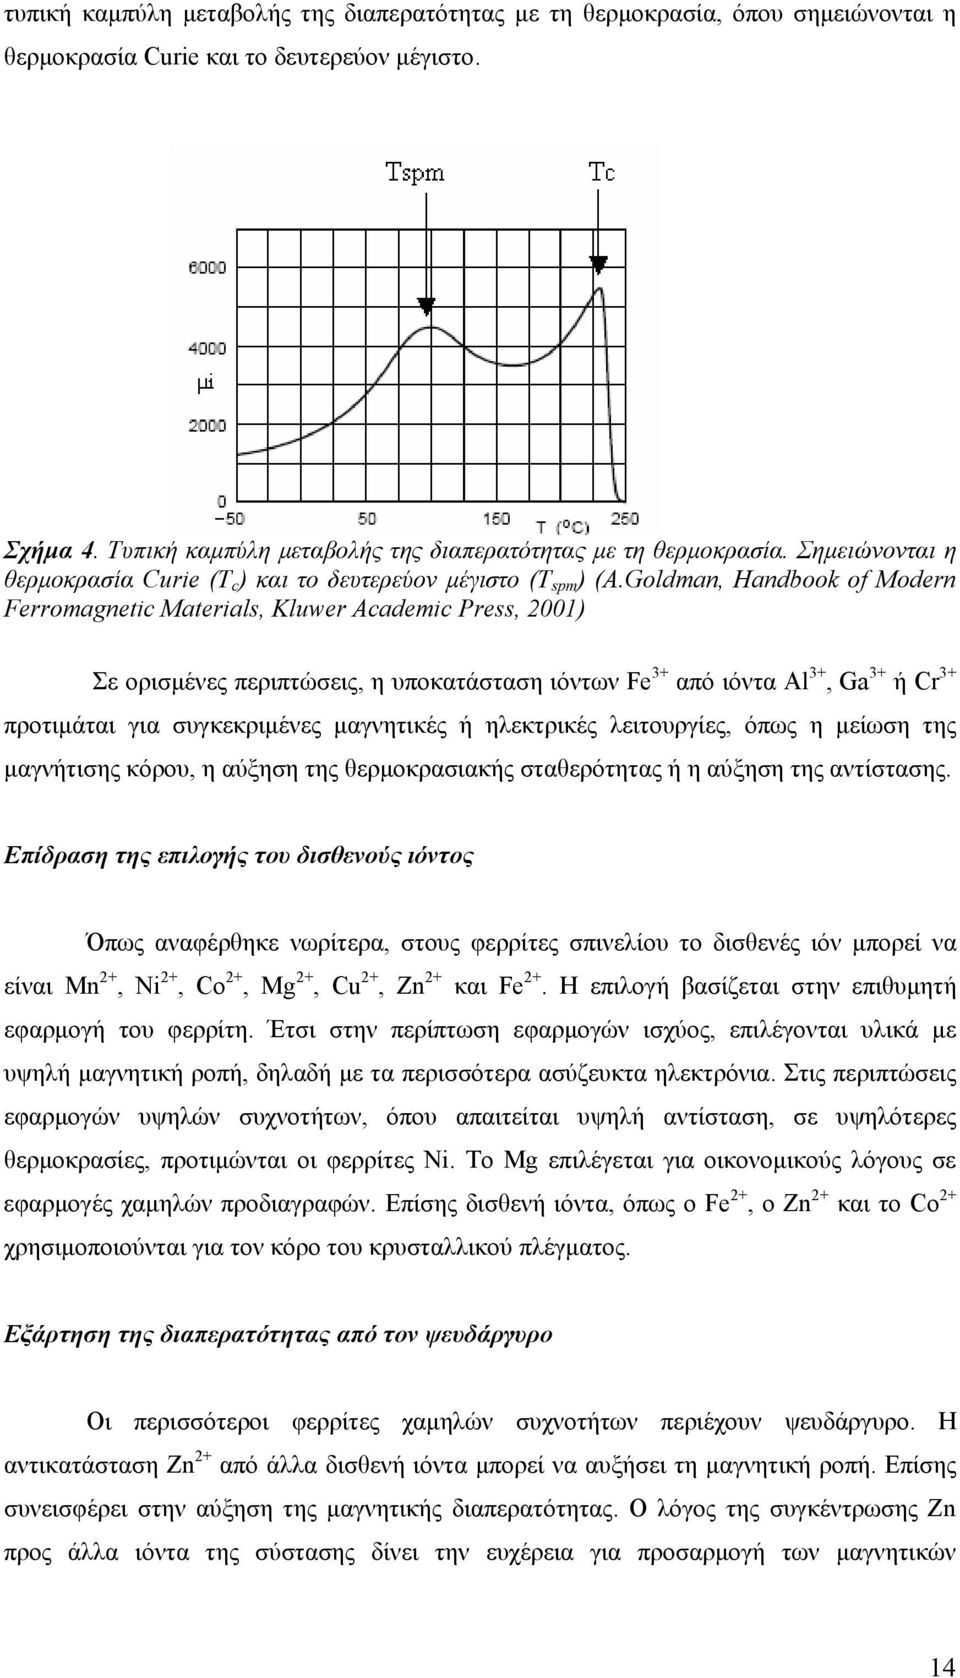 Goldman, Handbook of Modern Ferromagnetic Materials, Kluwer Academic Press, 2001) 3+ 3+ 3+ 3+ Σε ορισμένες περιπτώσεις, η υποκατάσταση ιόντων Fe από ιόντα Al, Ga ή Cr προτιμάται για συγκεκριμένες